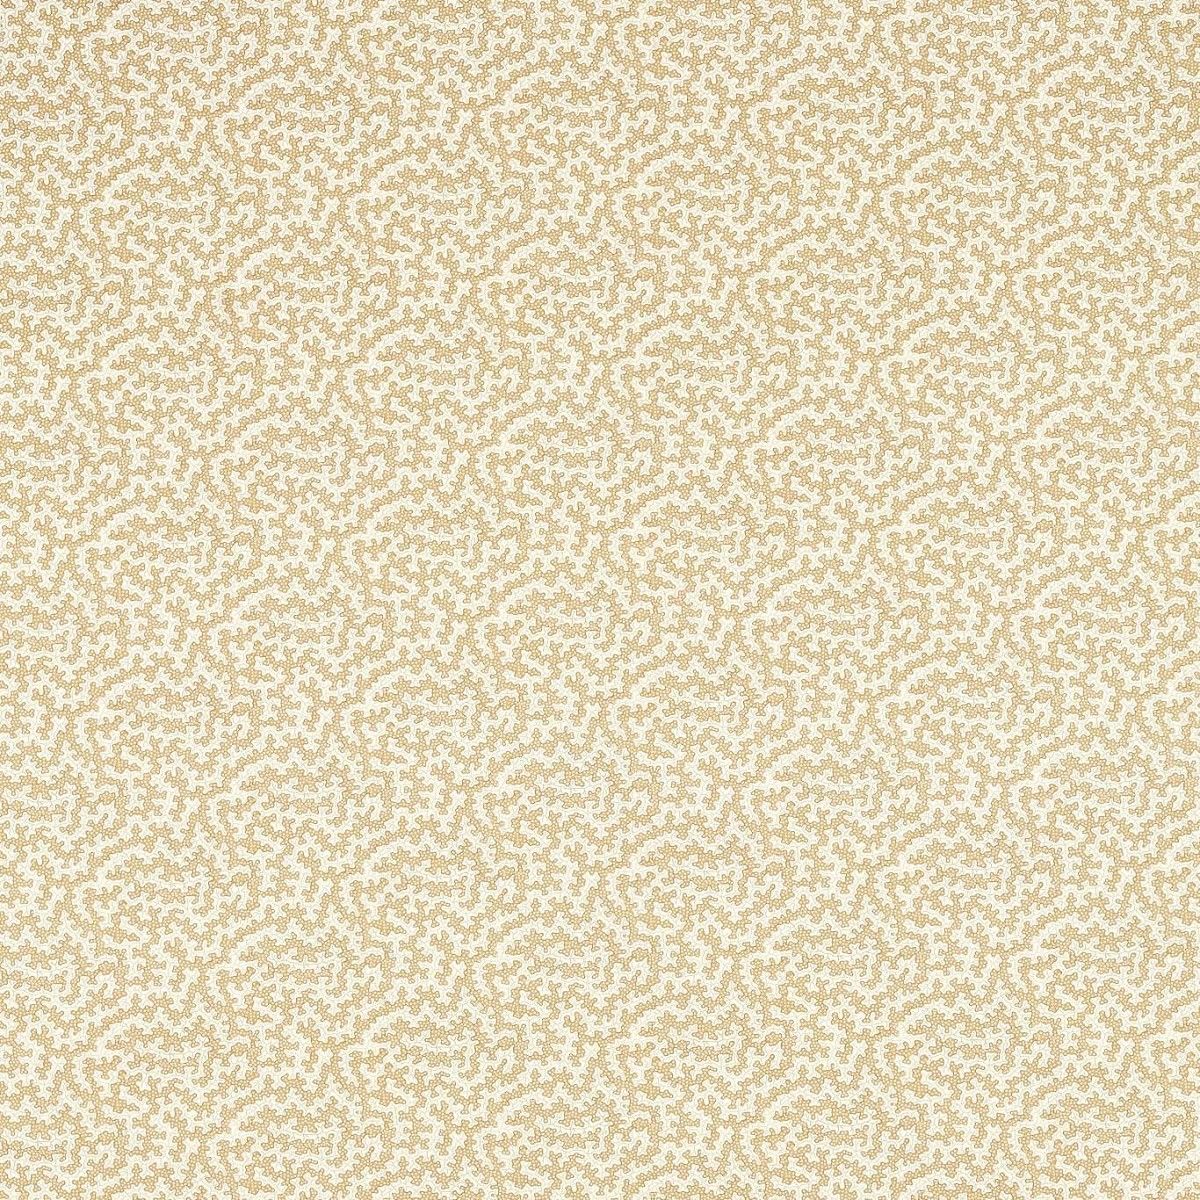 Truffle Wheat Fabric by Sanderson